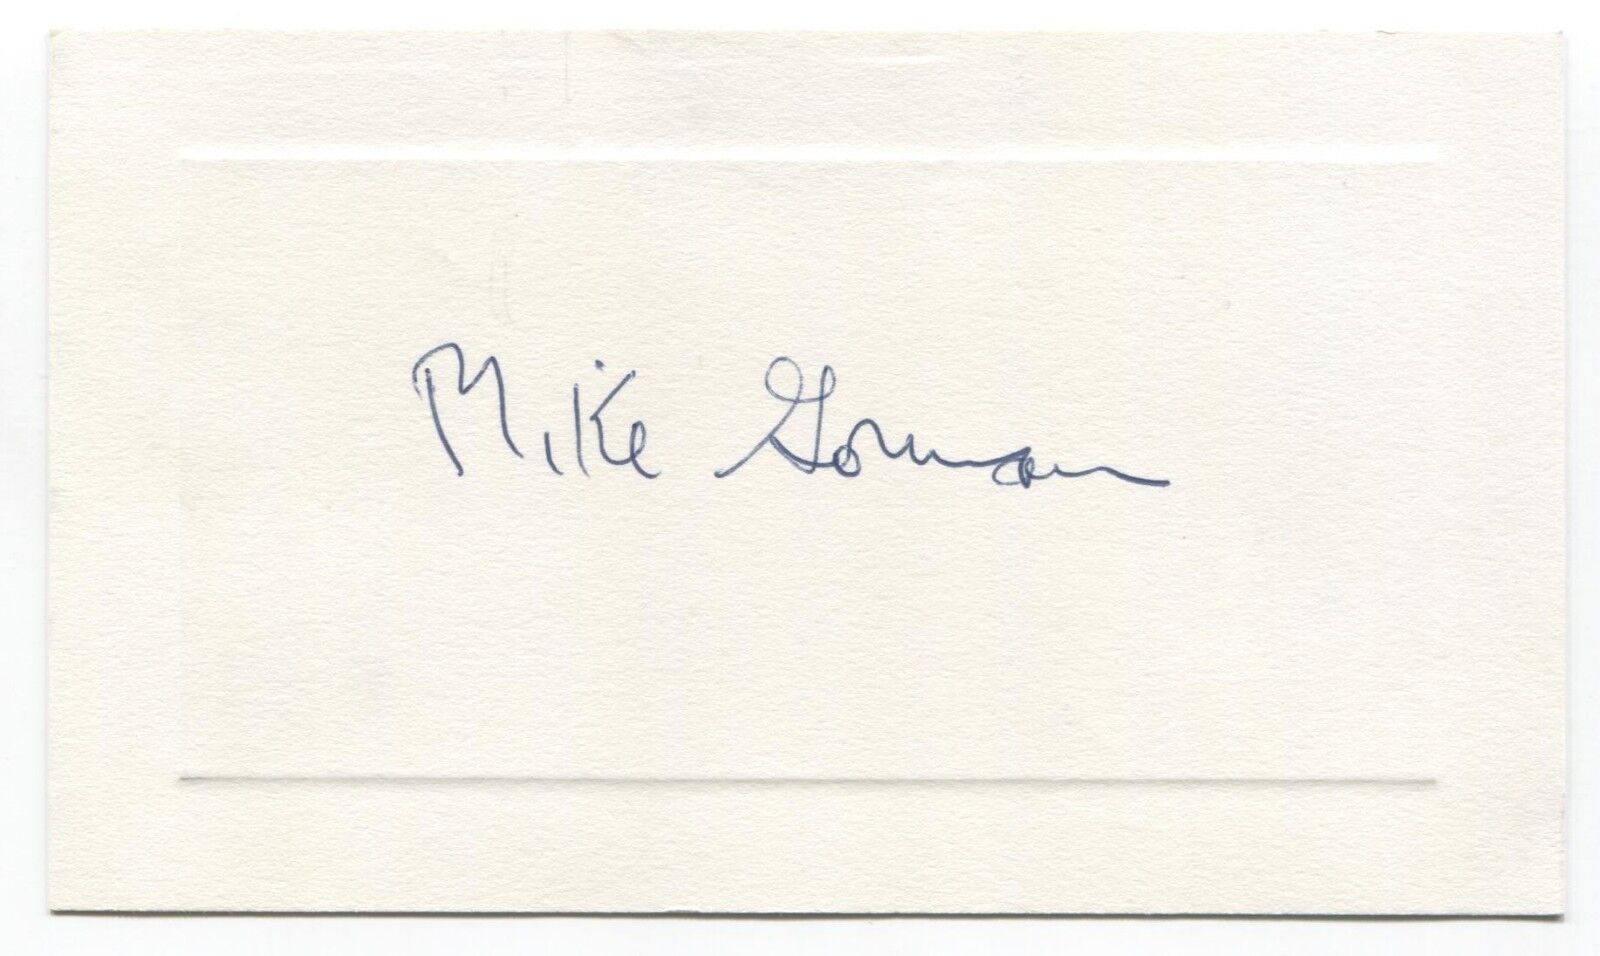 Mike Gorman Signed Card Autographed Signature Mental Health Activist